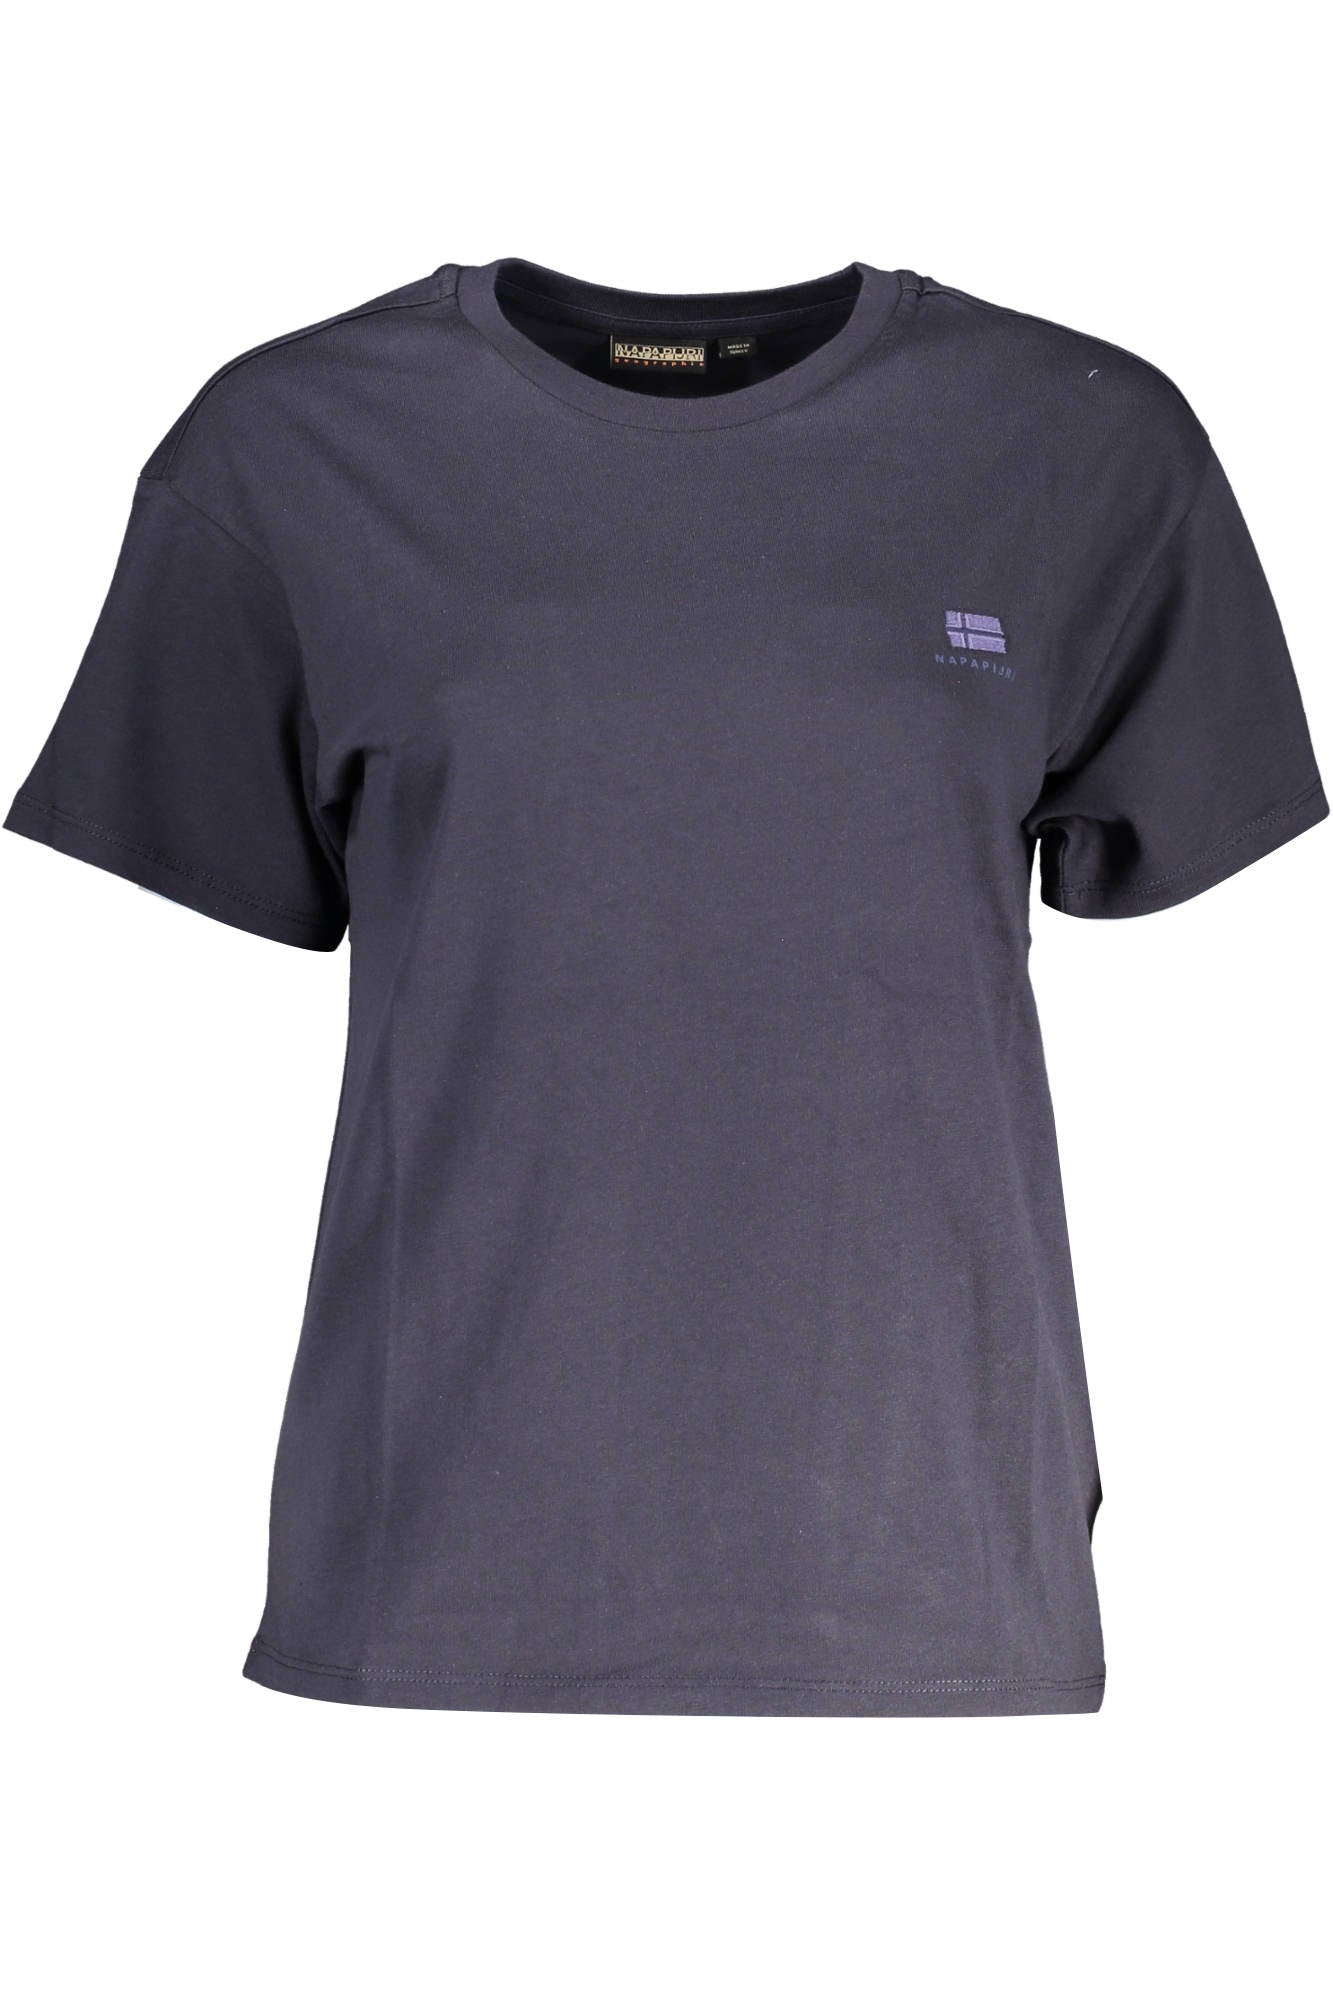 Napapijri Blue Cotton Tops & T-Shirt - Fizigo